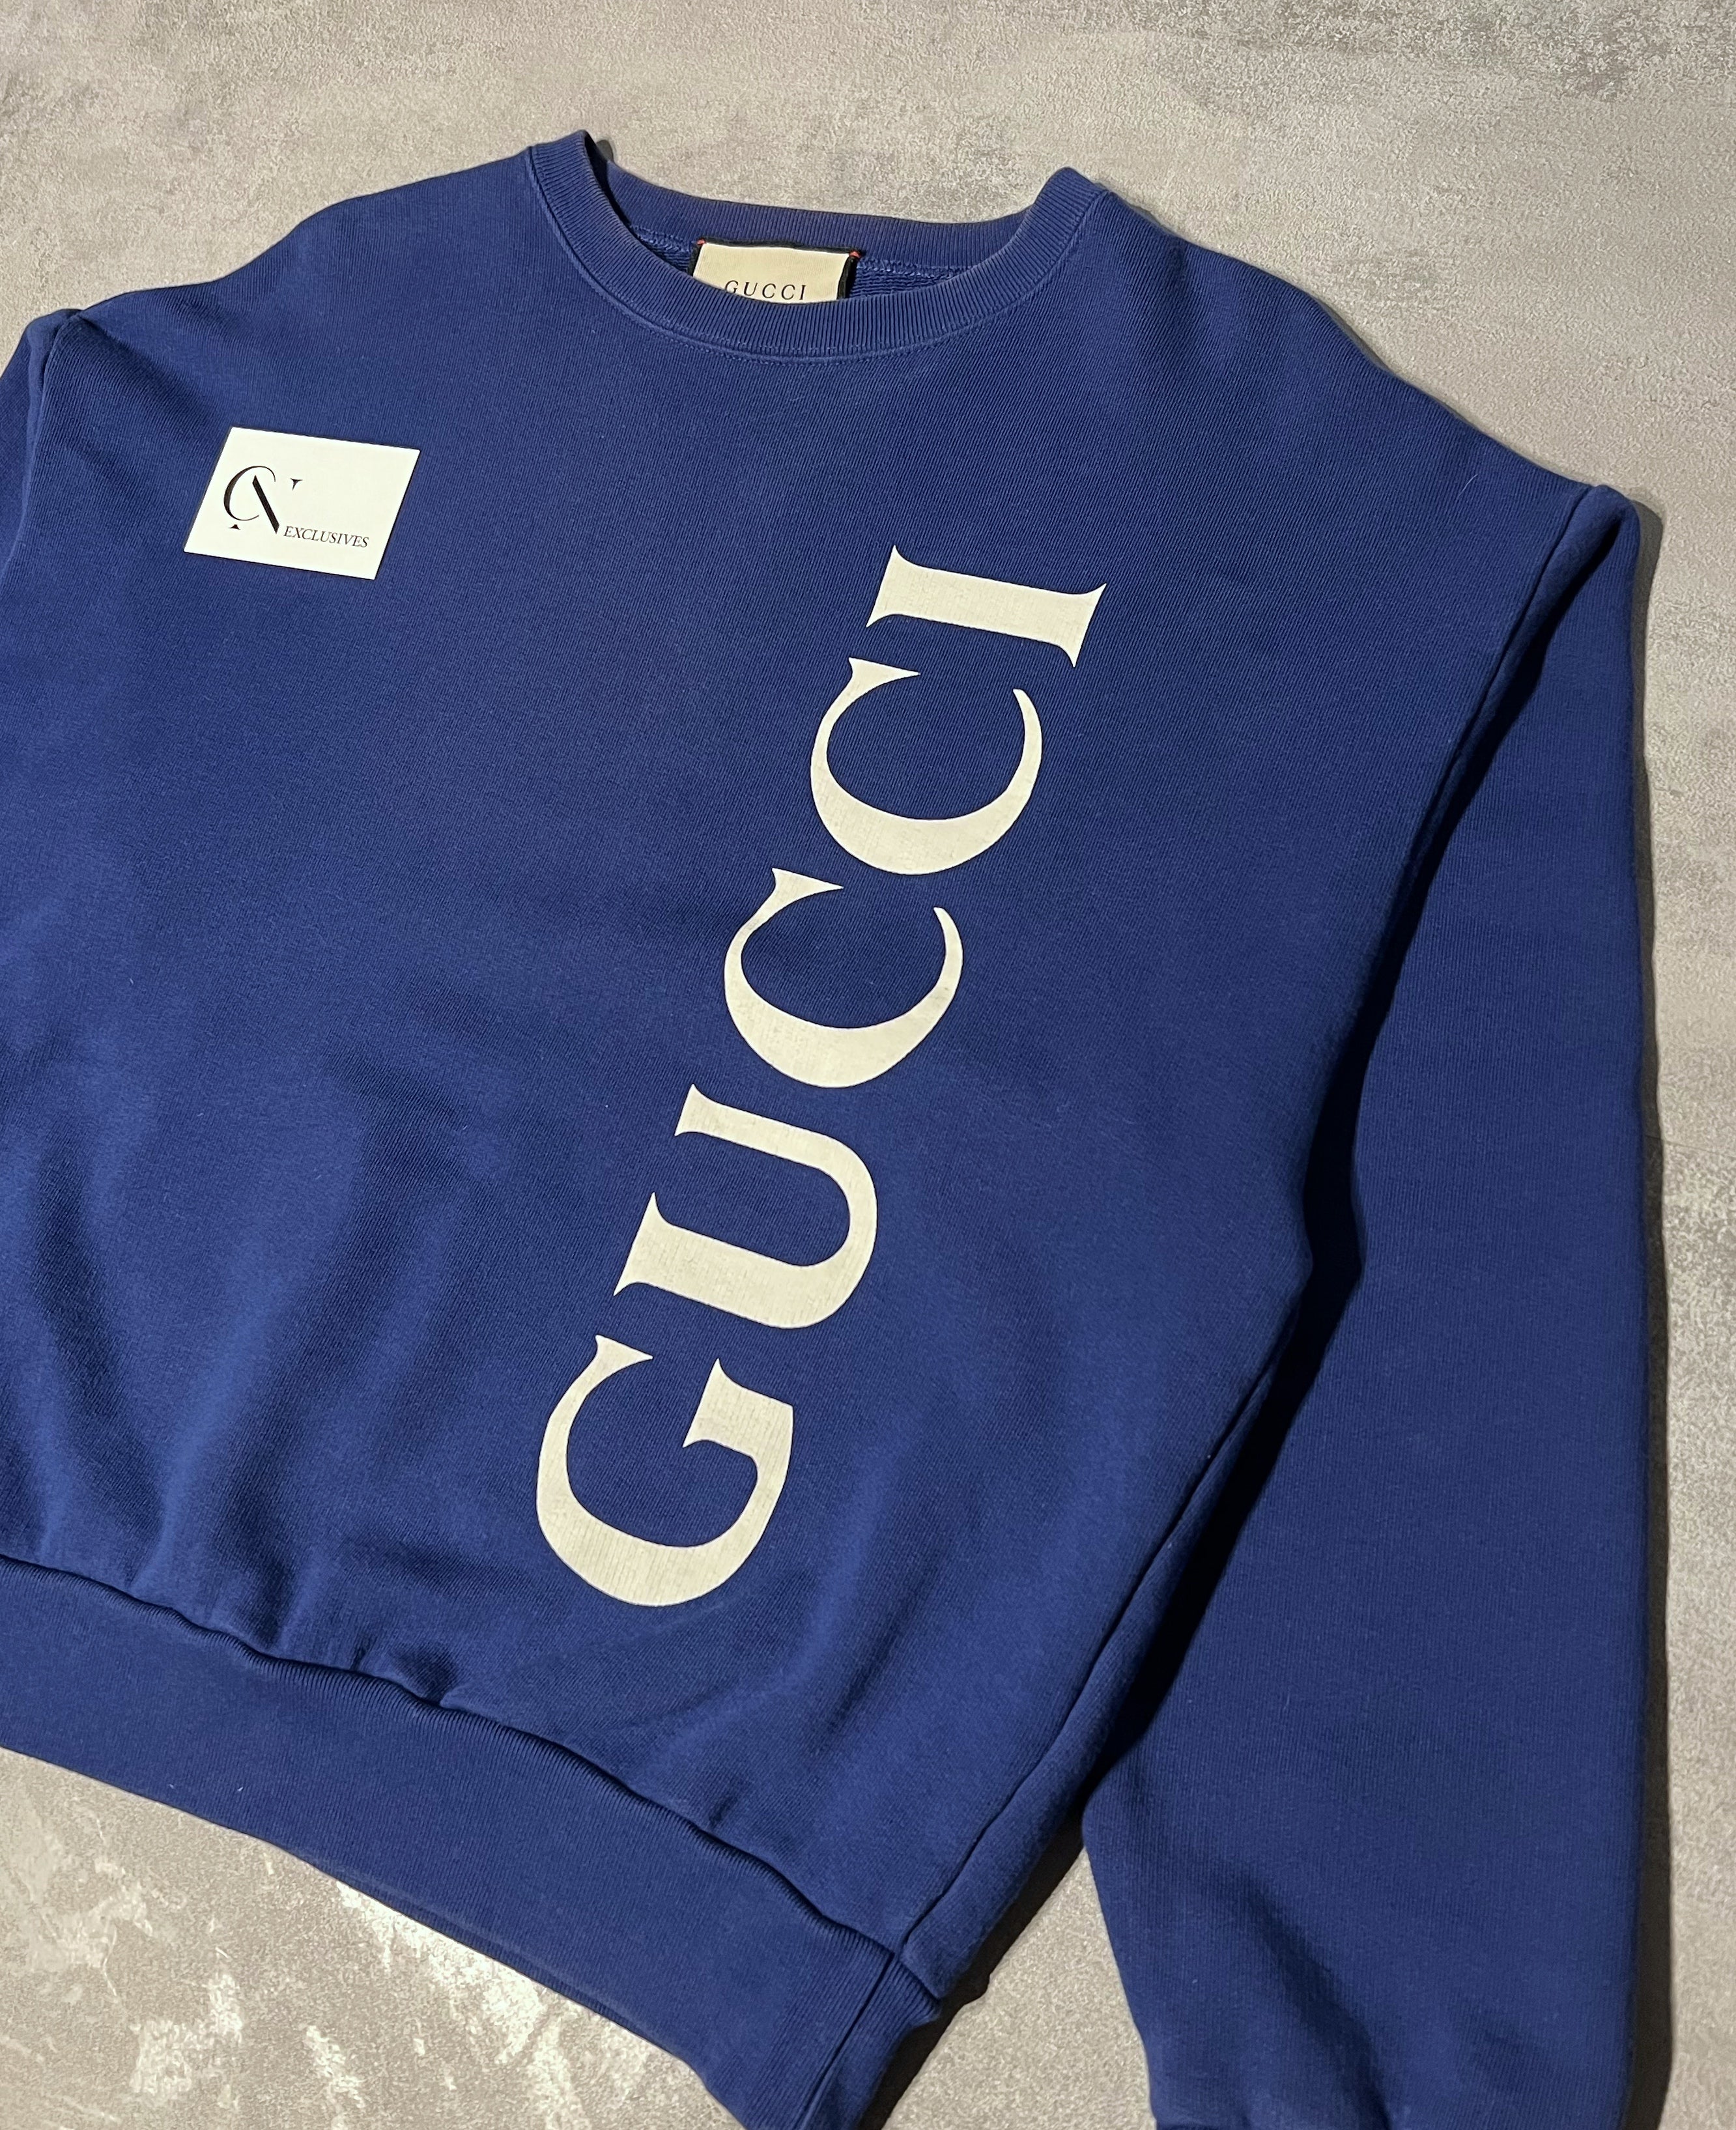 Gucci Logo Sweater - Size S